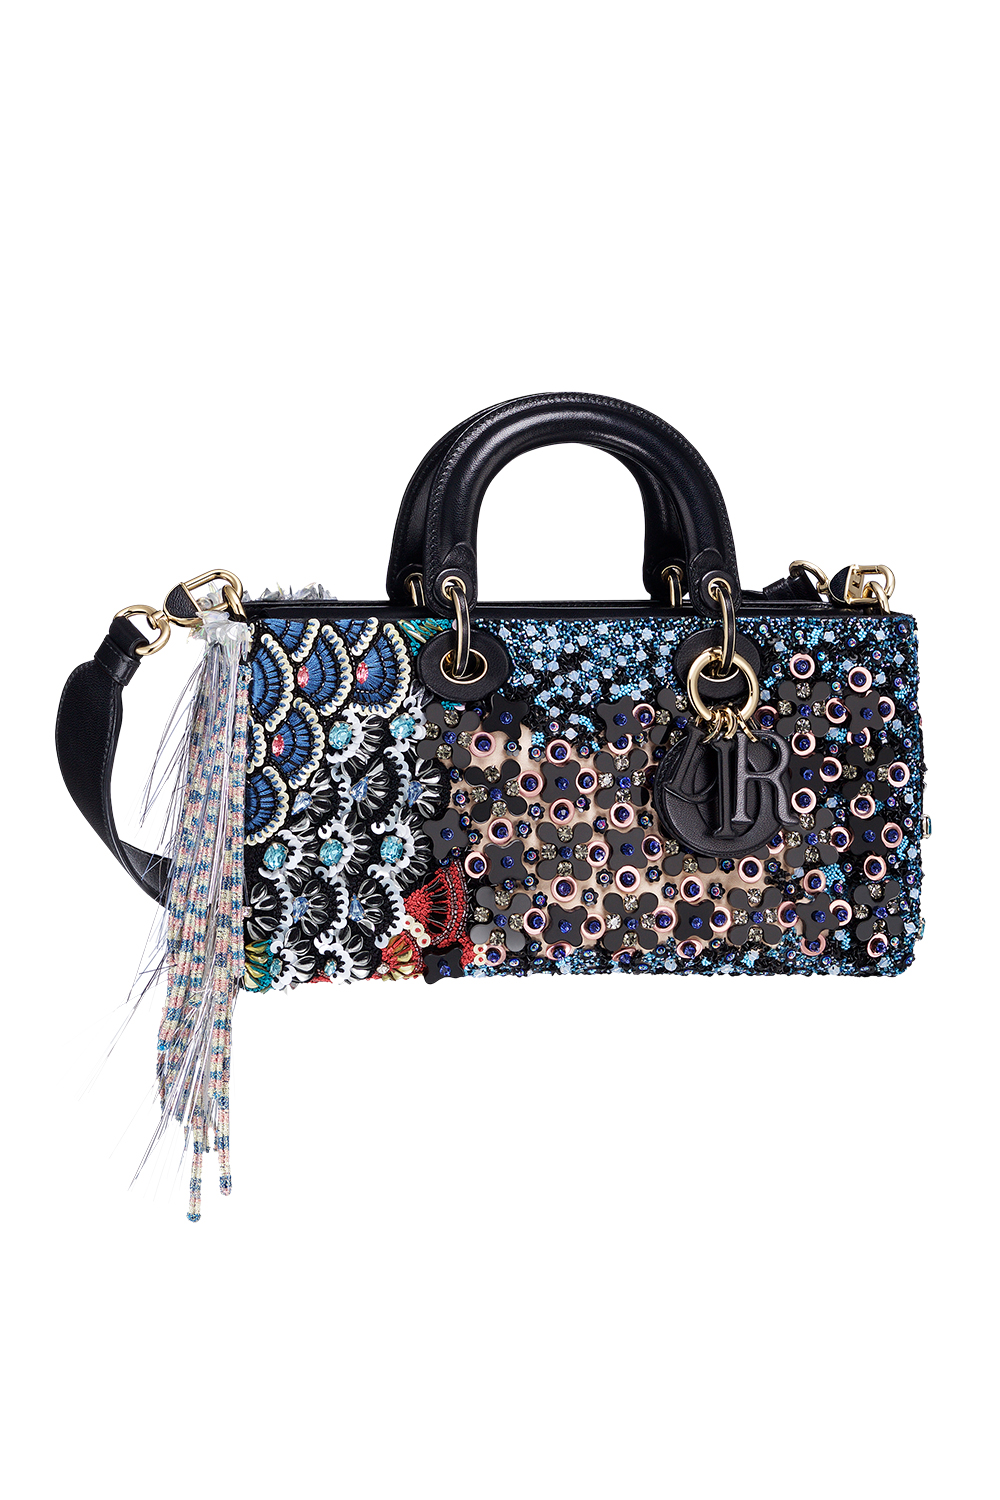 Bag, $9,400, by Christian Dior.